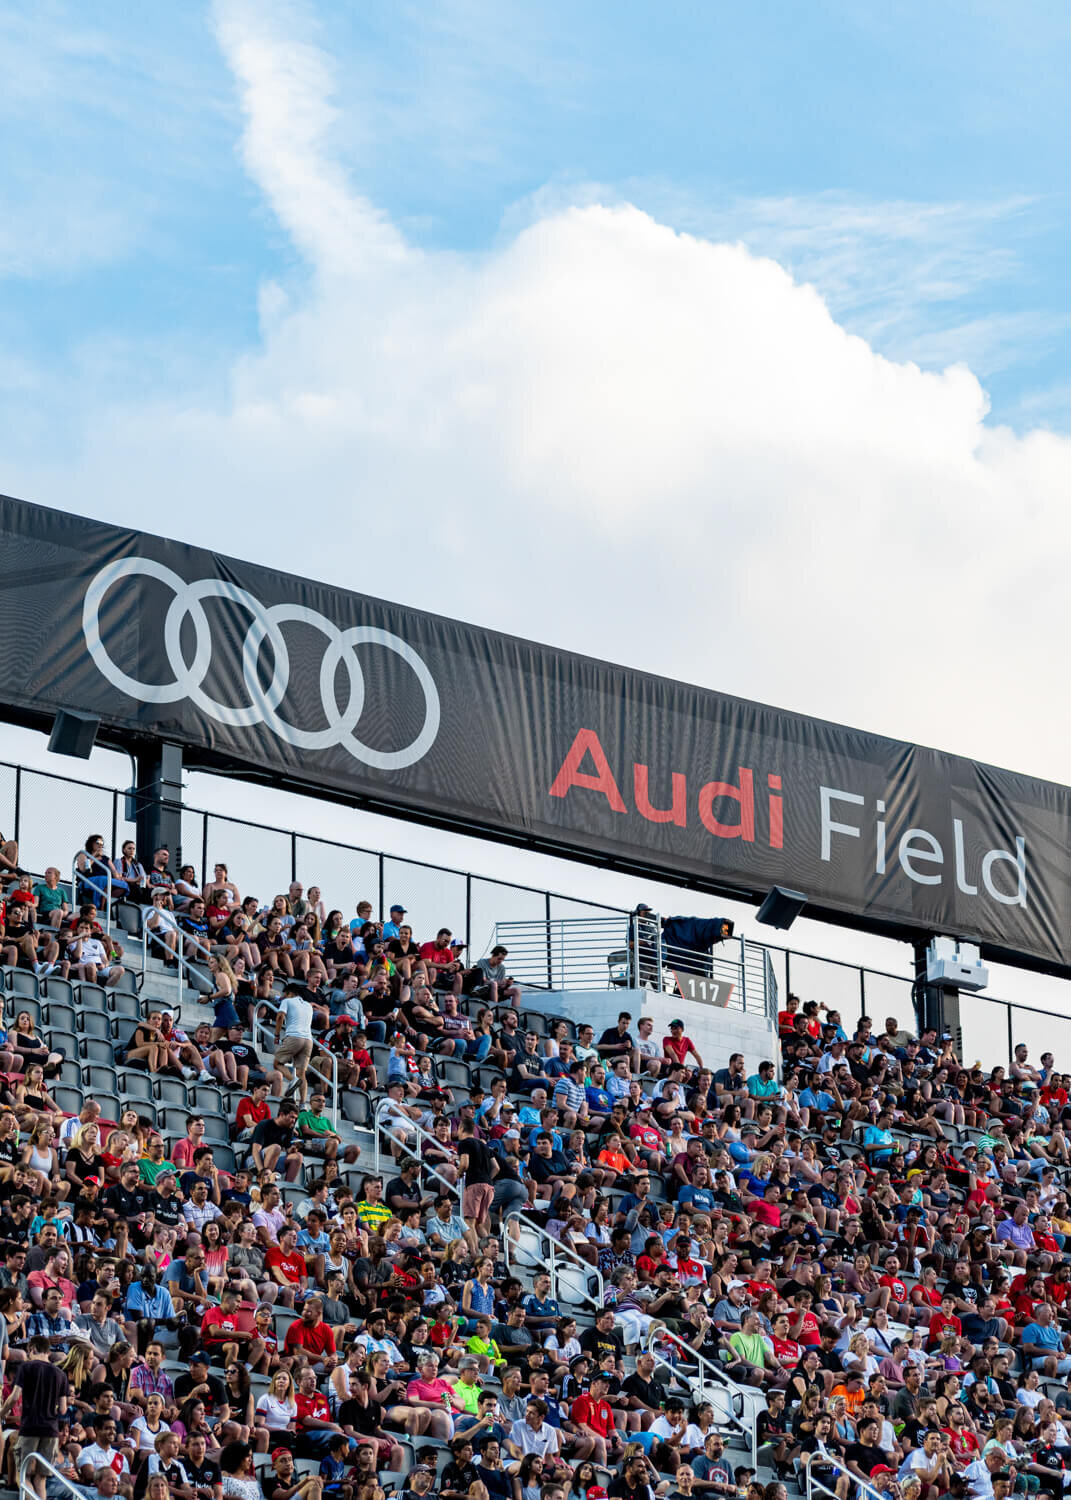 Audi-Field-Washington-DC-United-MLS-Soccer-Stadium-crvnka-Photography-10.JPG